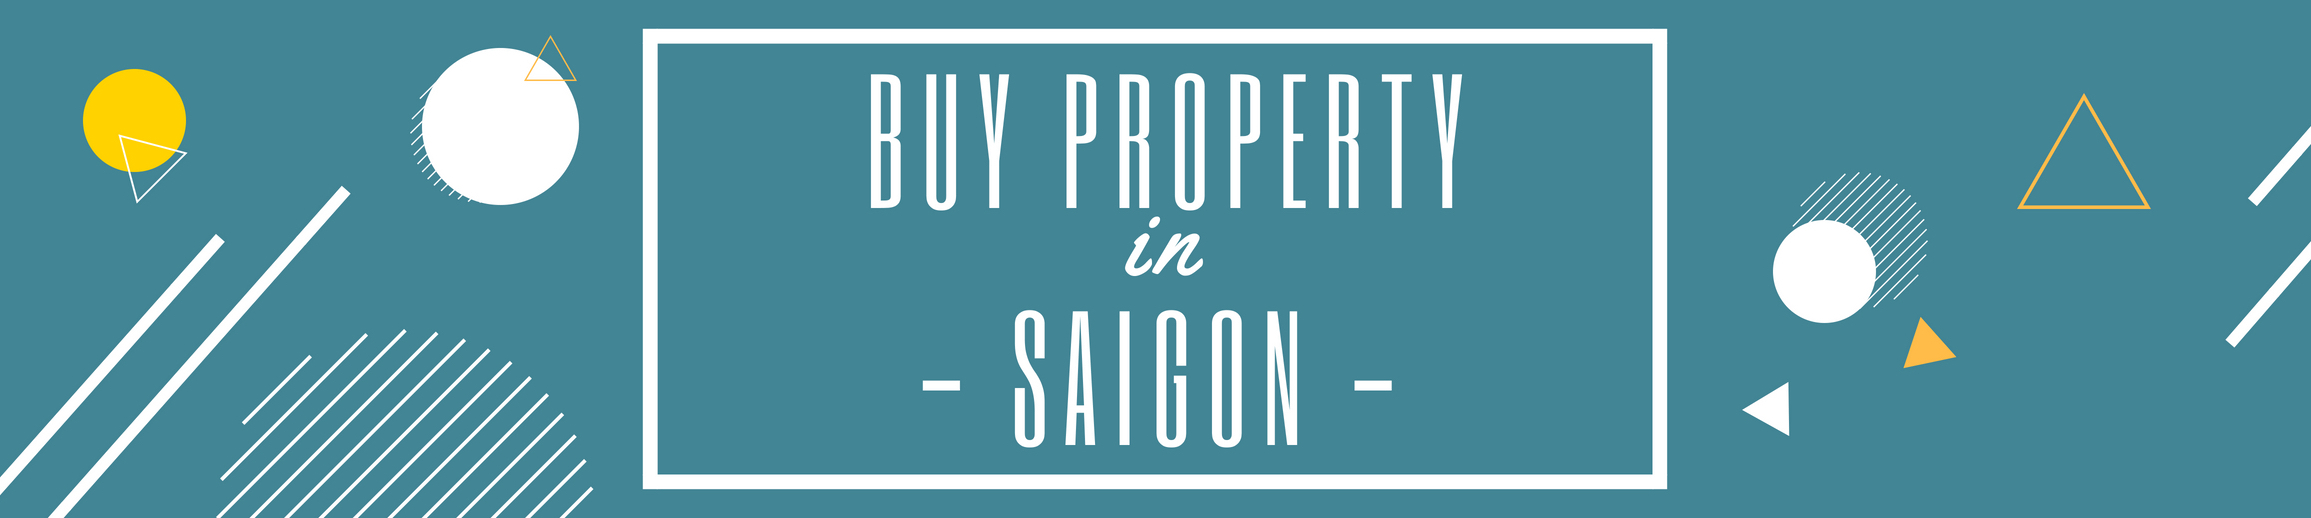 how to buy property ho chi minh city vietnam